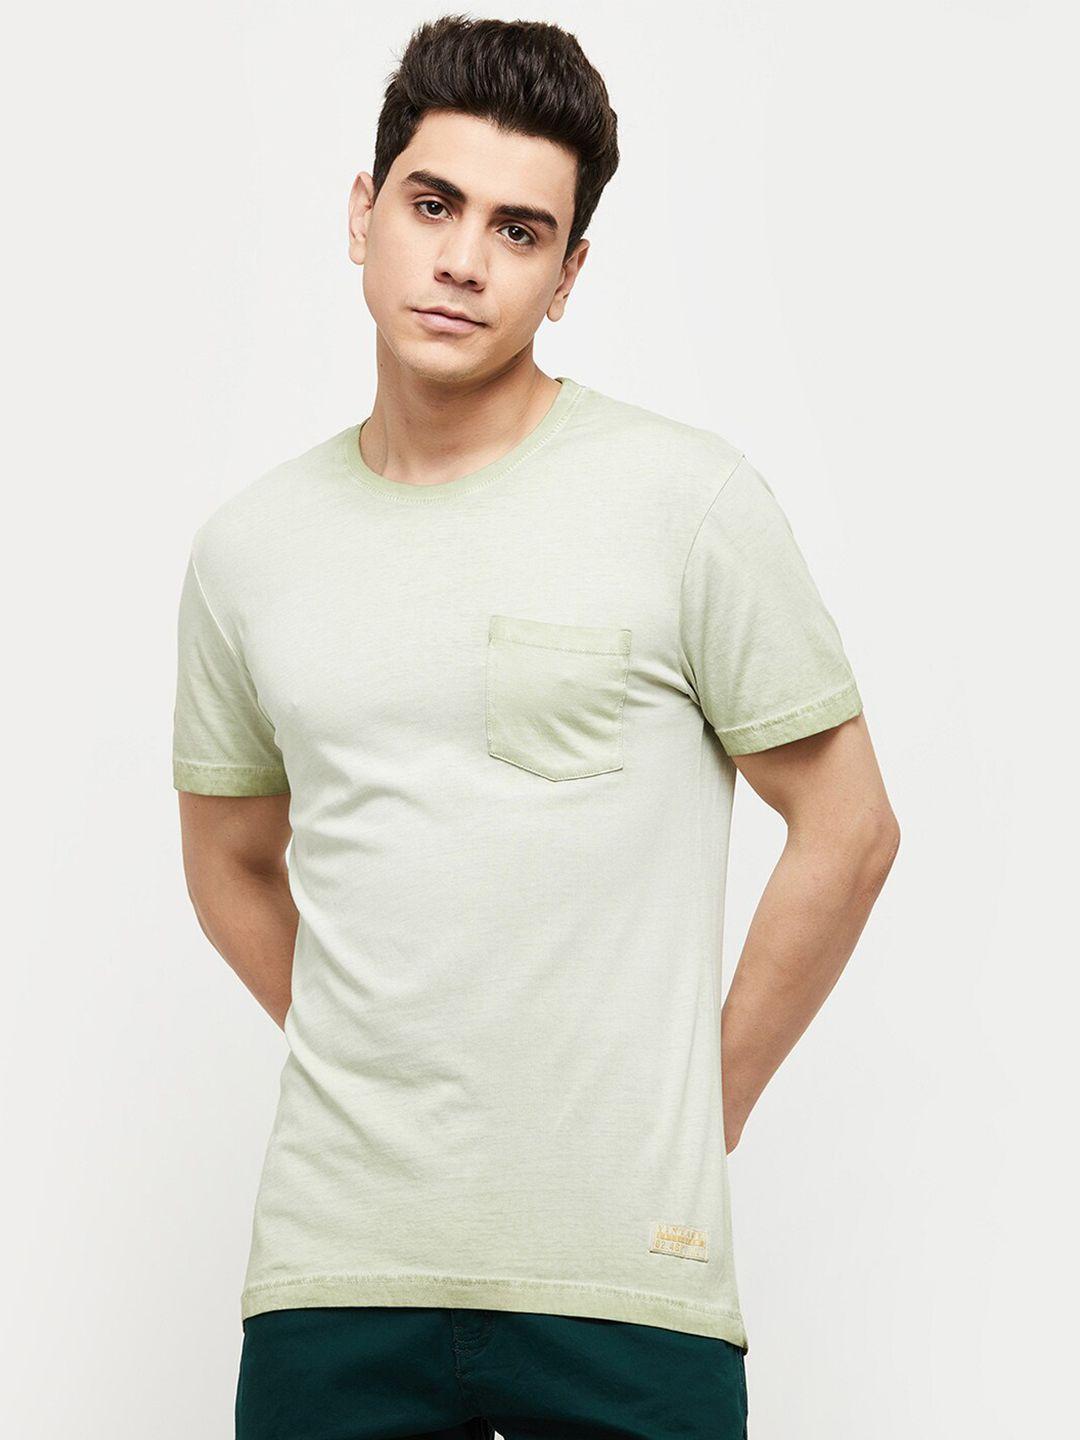 max-men-green-round-neck-solid-t-shirt